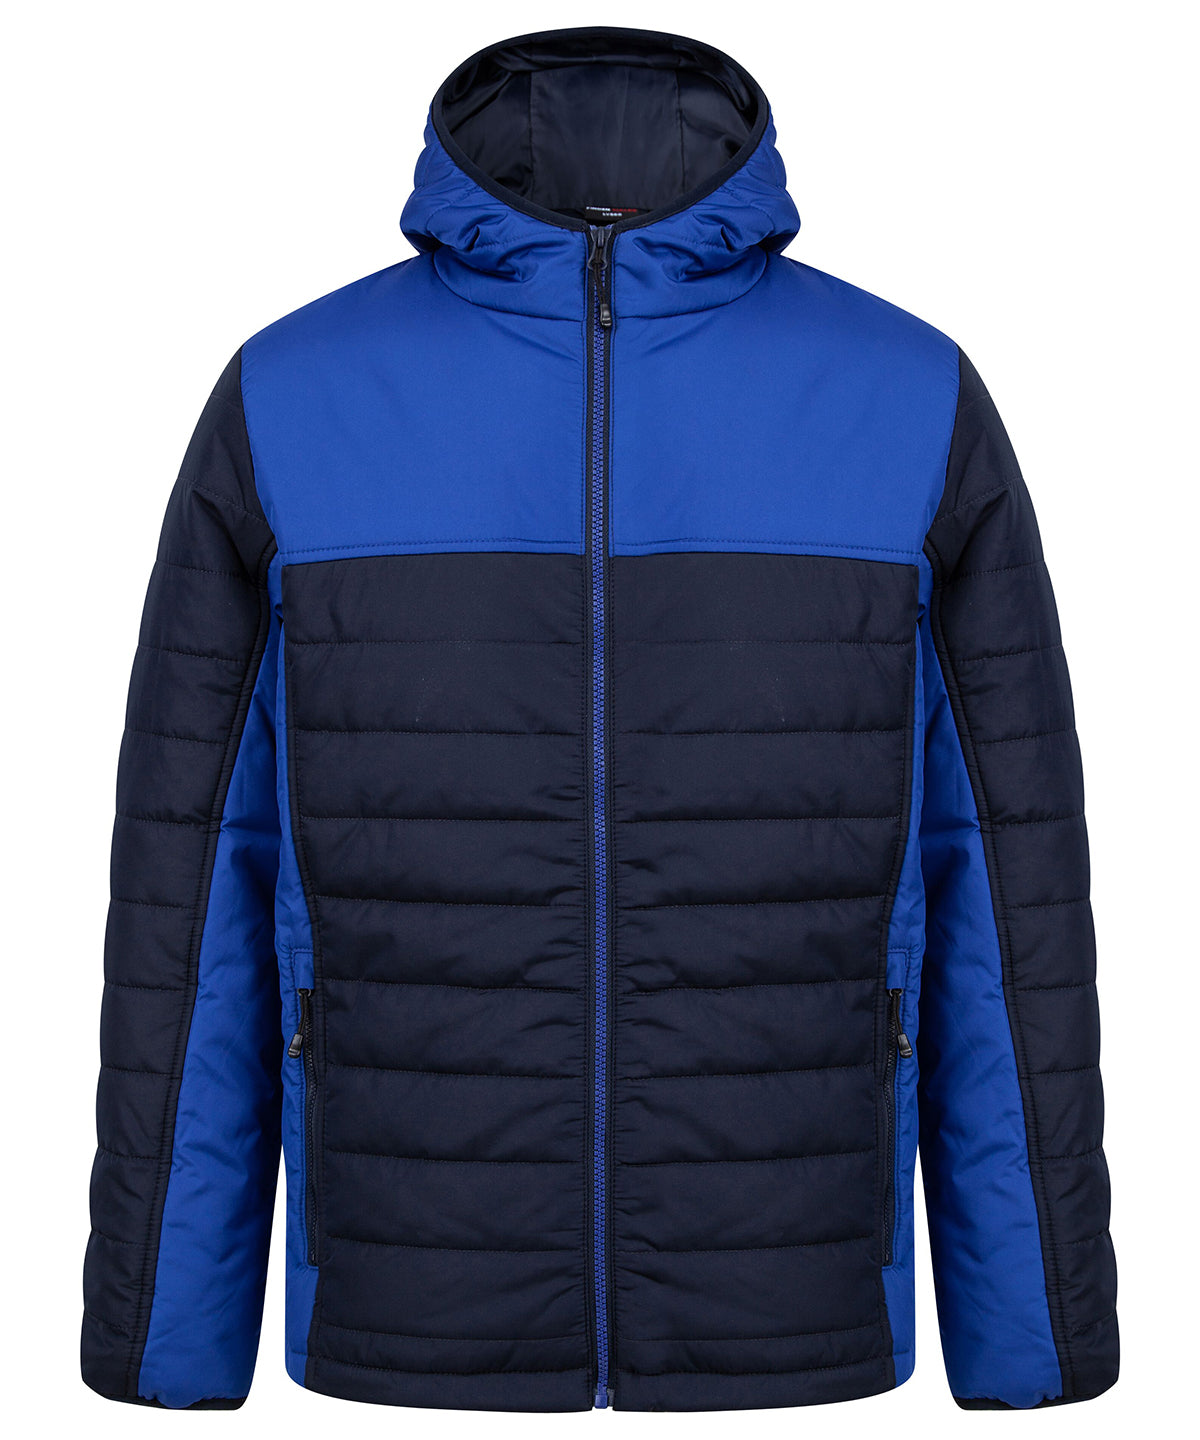 Personalised Jackets - Black Finden & Hales Hooded contrast padded jacket